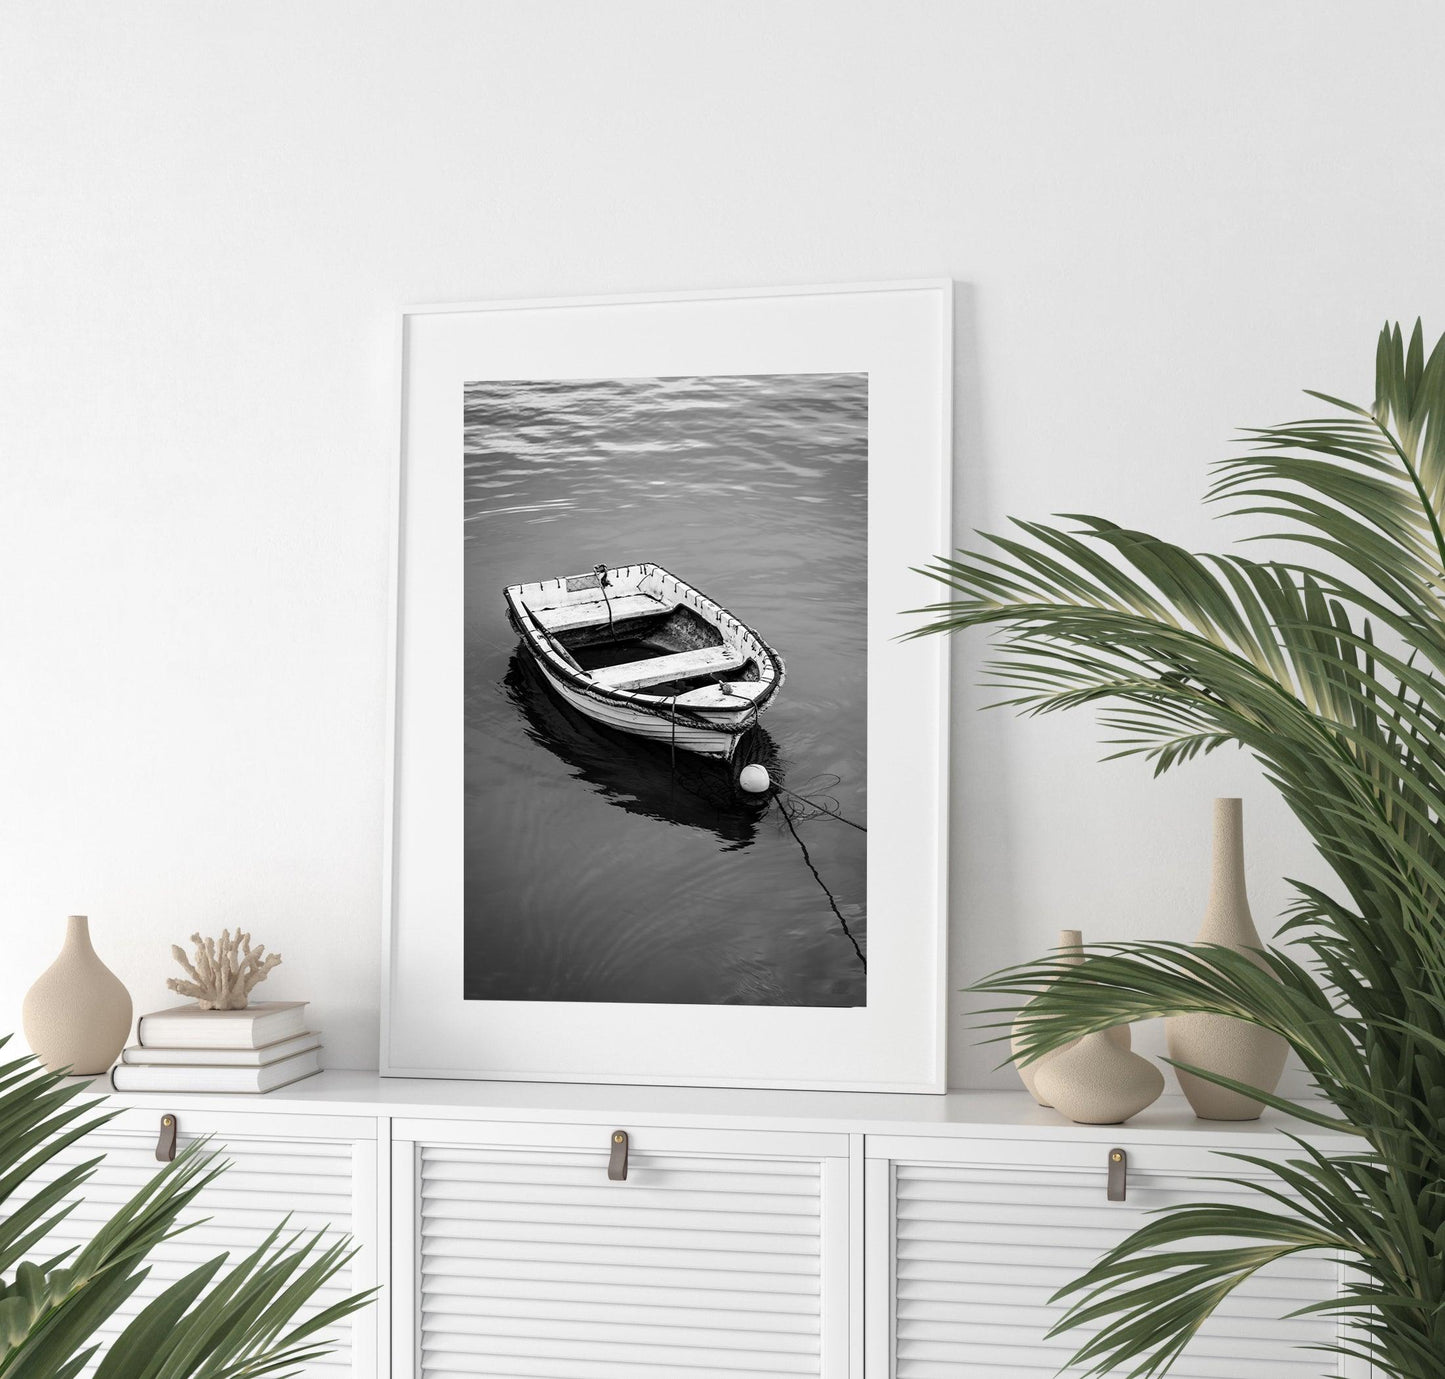 B&W Wooden Boat | Beach Print - Departures Print Shop